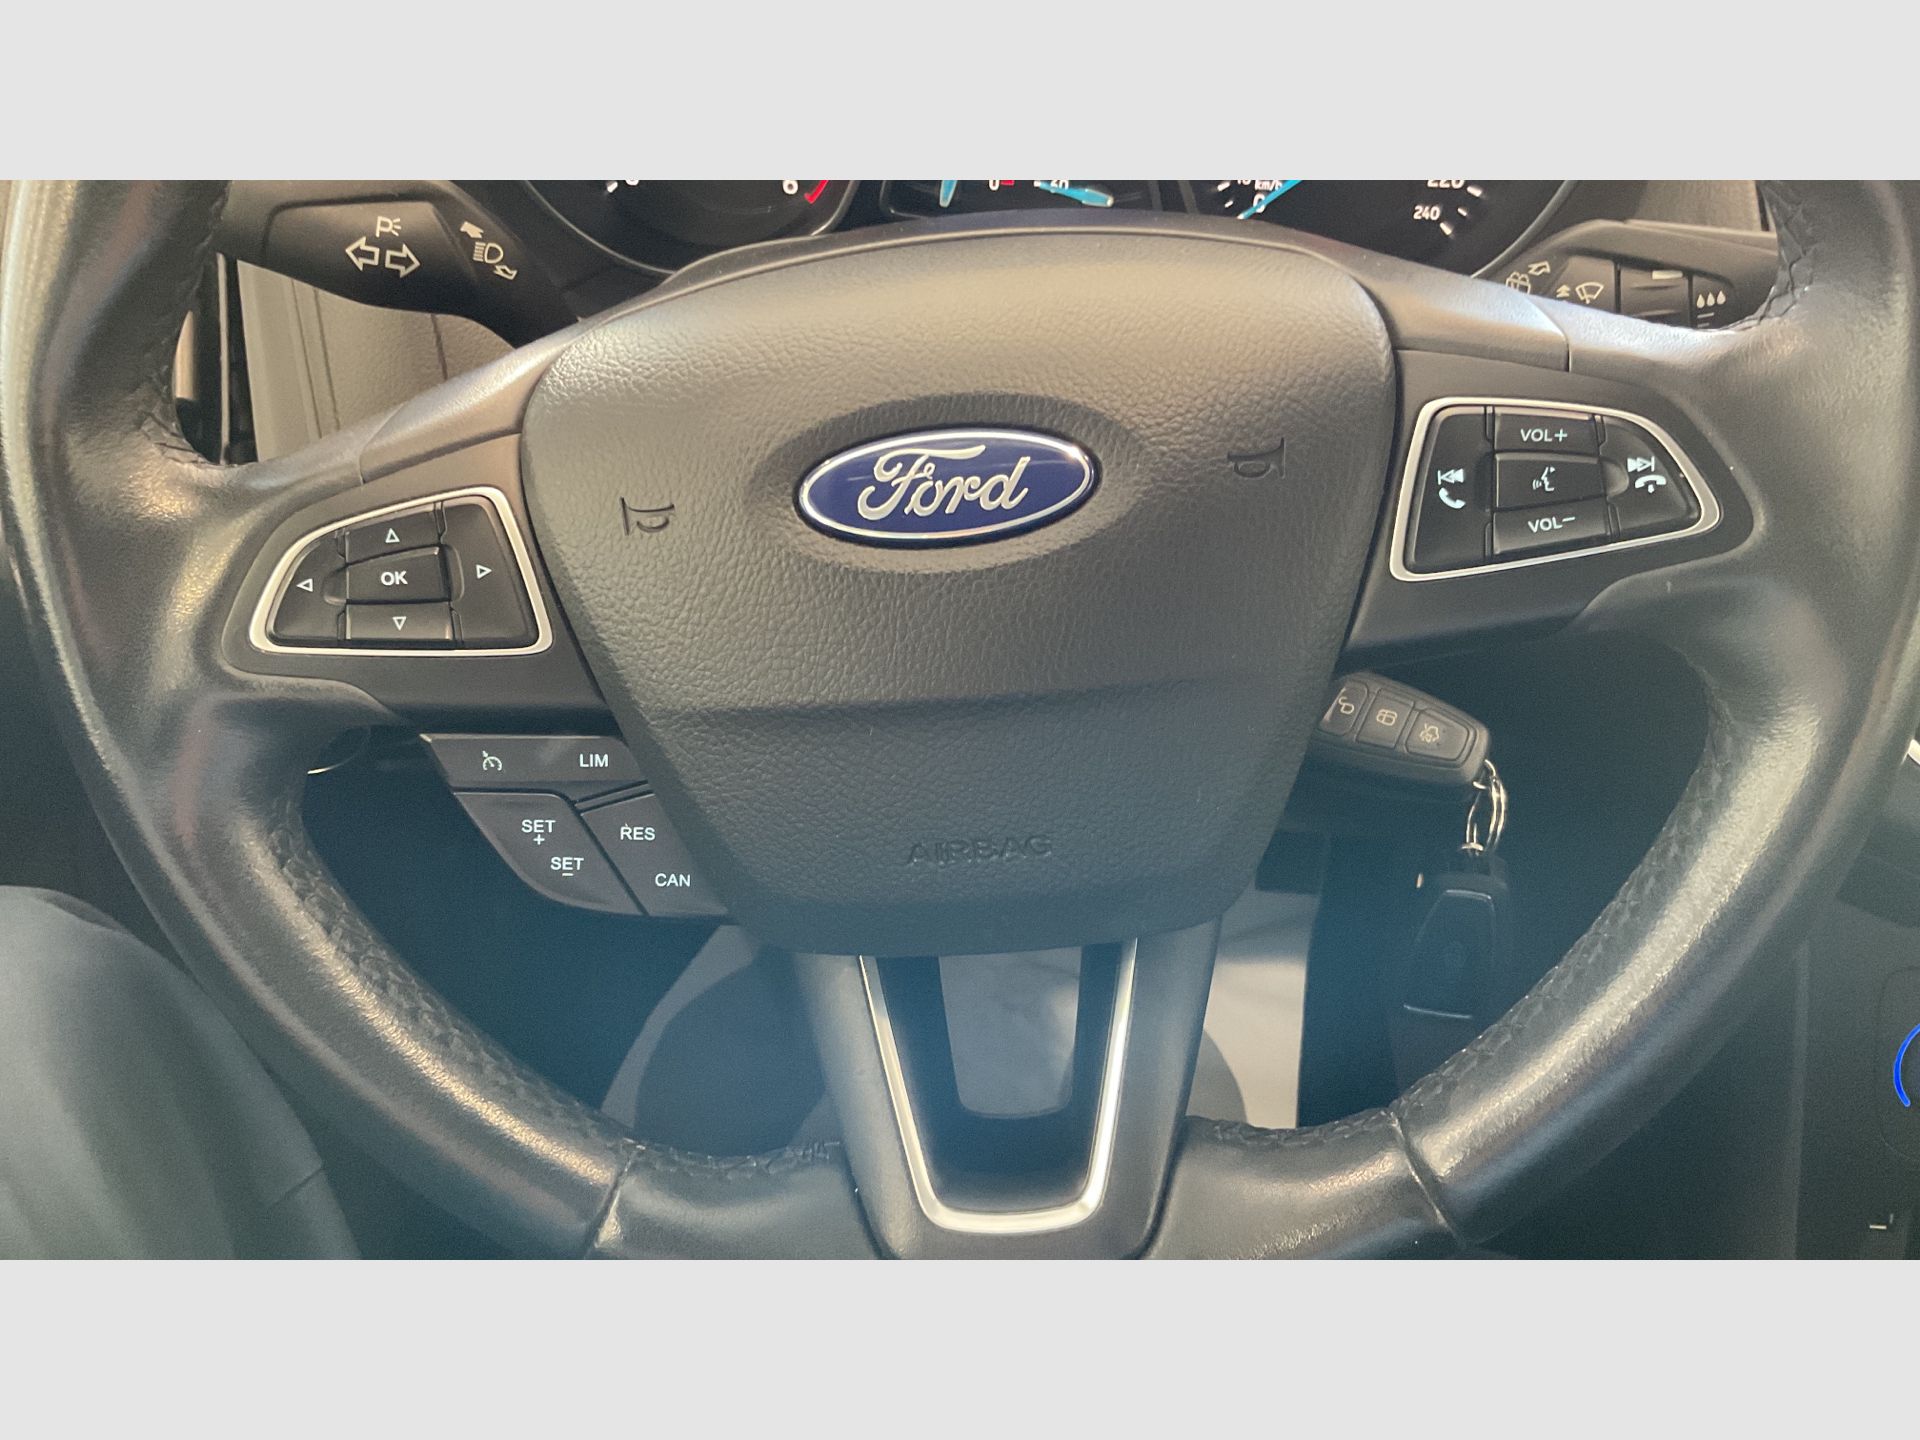 Ford Focus 1.5 TDCi E6 88kW Trend+ Sportbreak